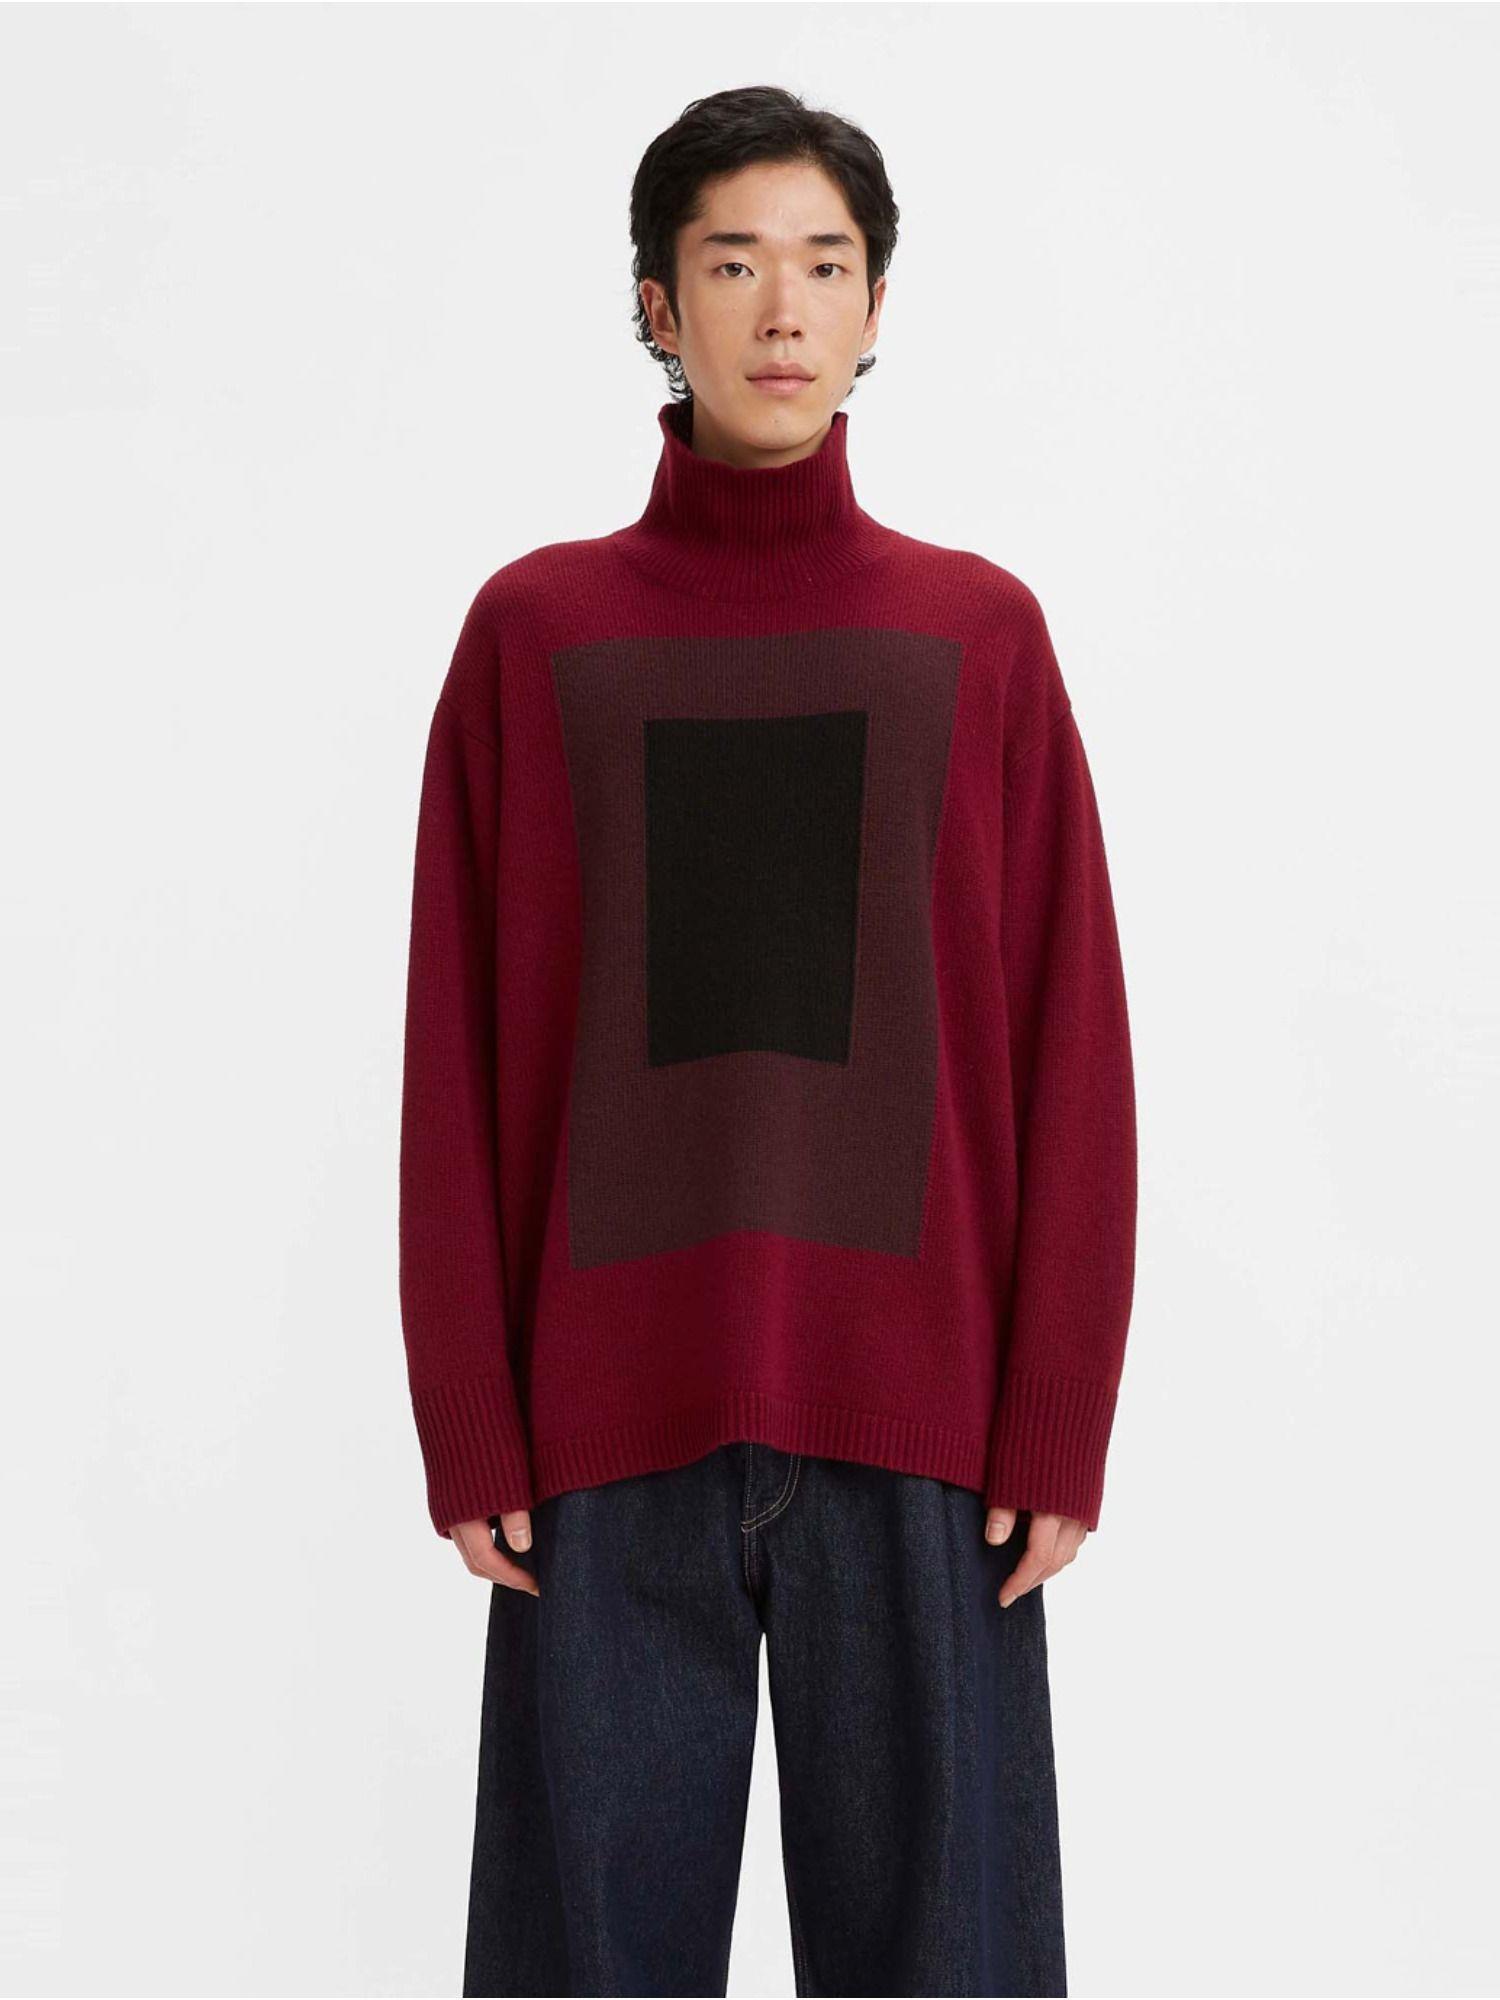 men's-turtle-neck-maroon-sweater